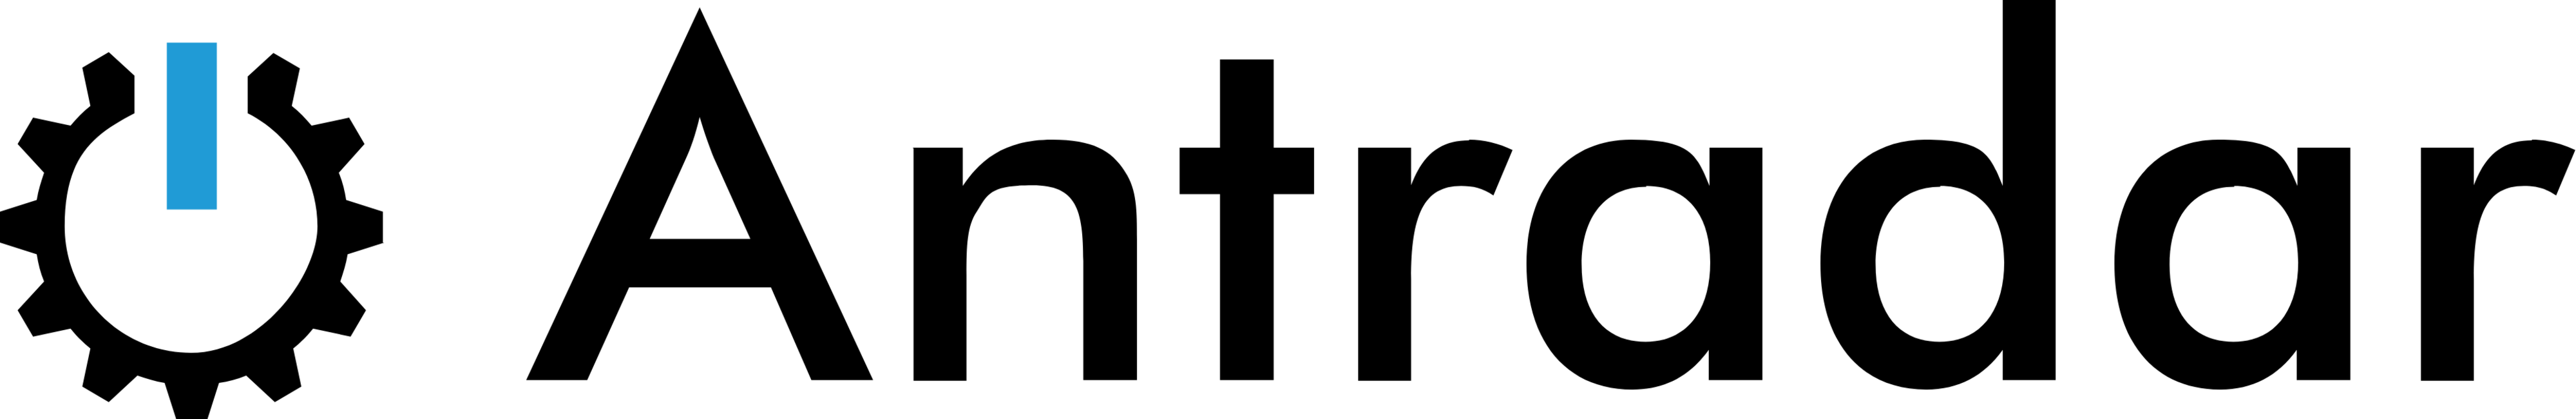 Antradar Software logo